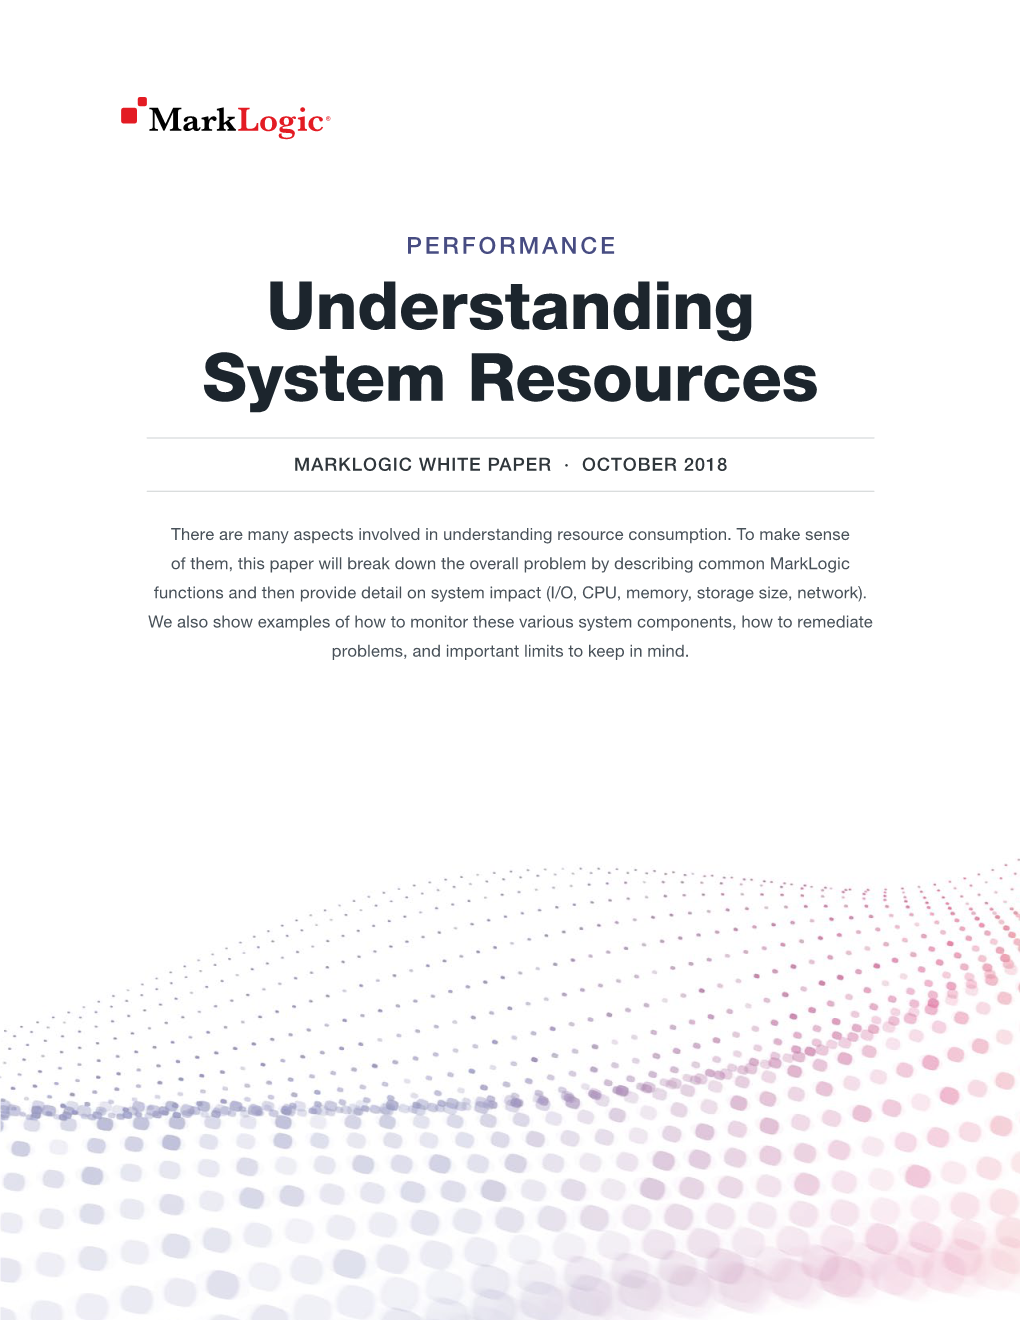 Performance: Understanding System Resources